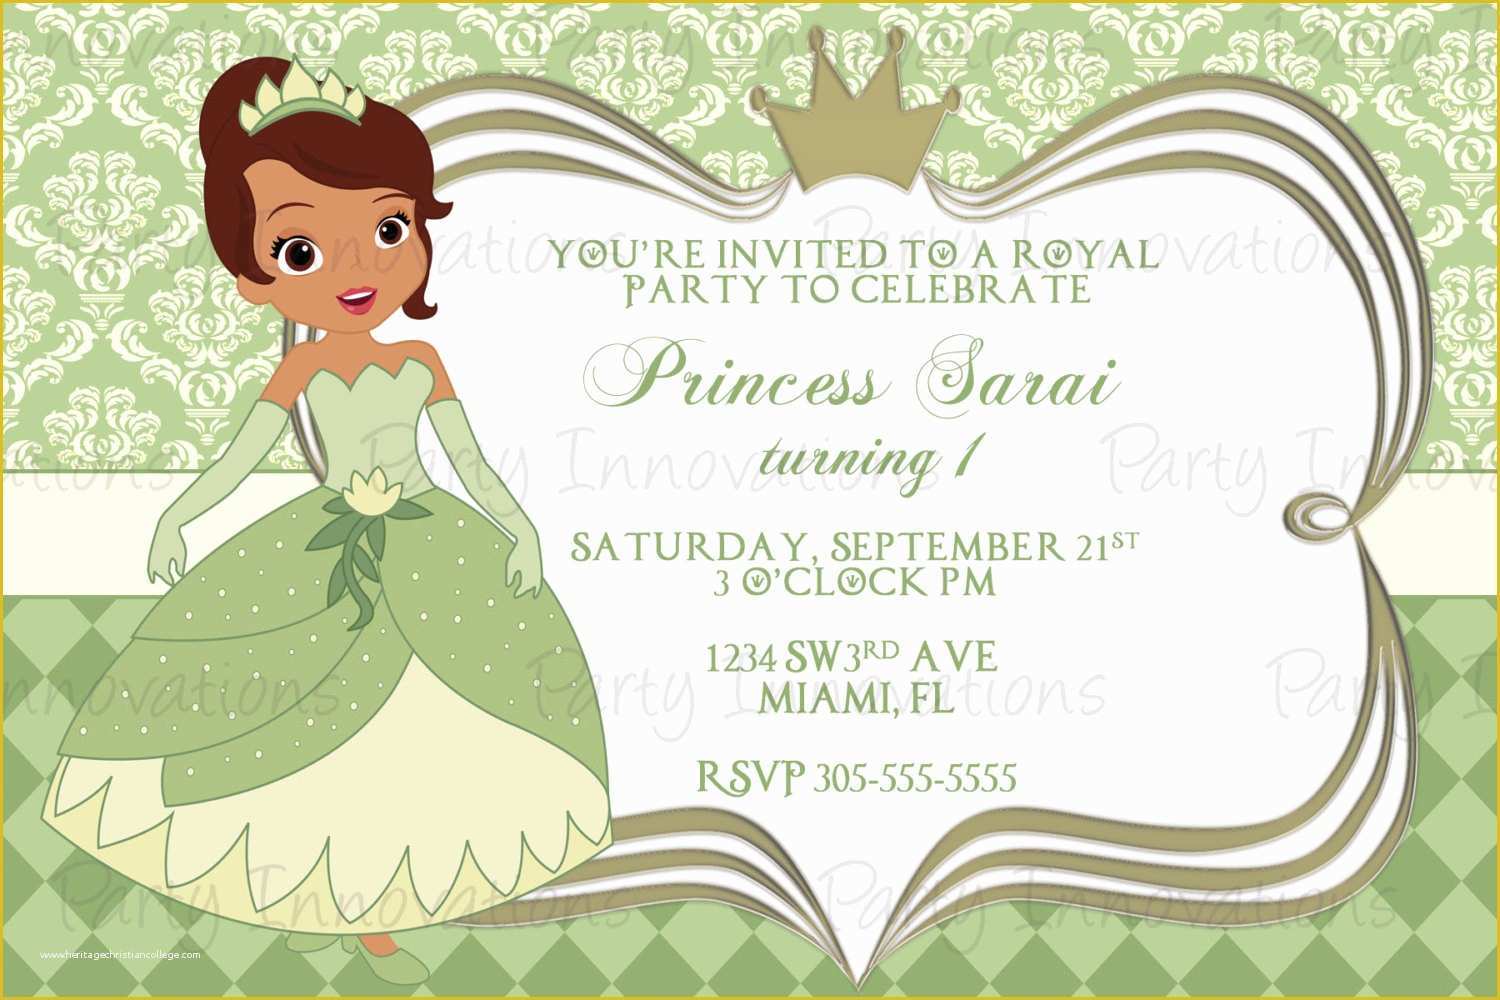 Free Princess Tiana Invitation Template Of Princess and the Frog Birthday Invitations